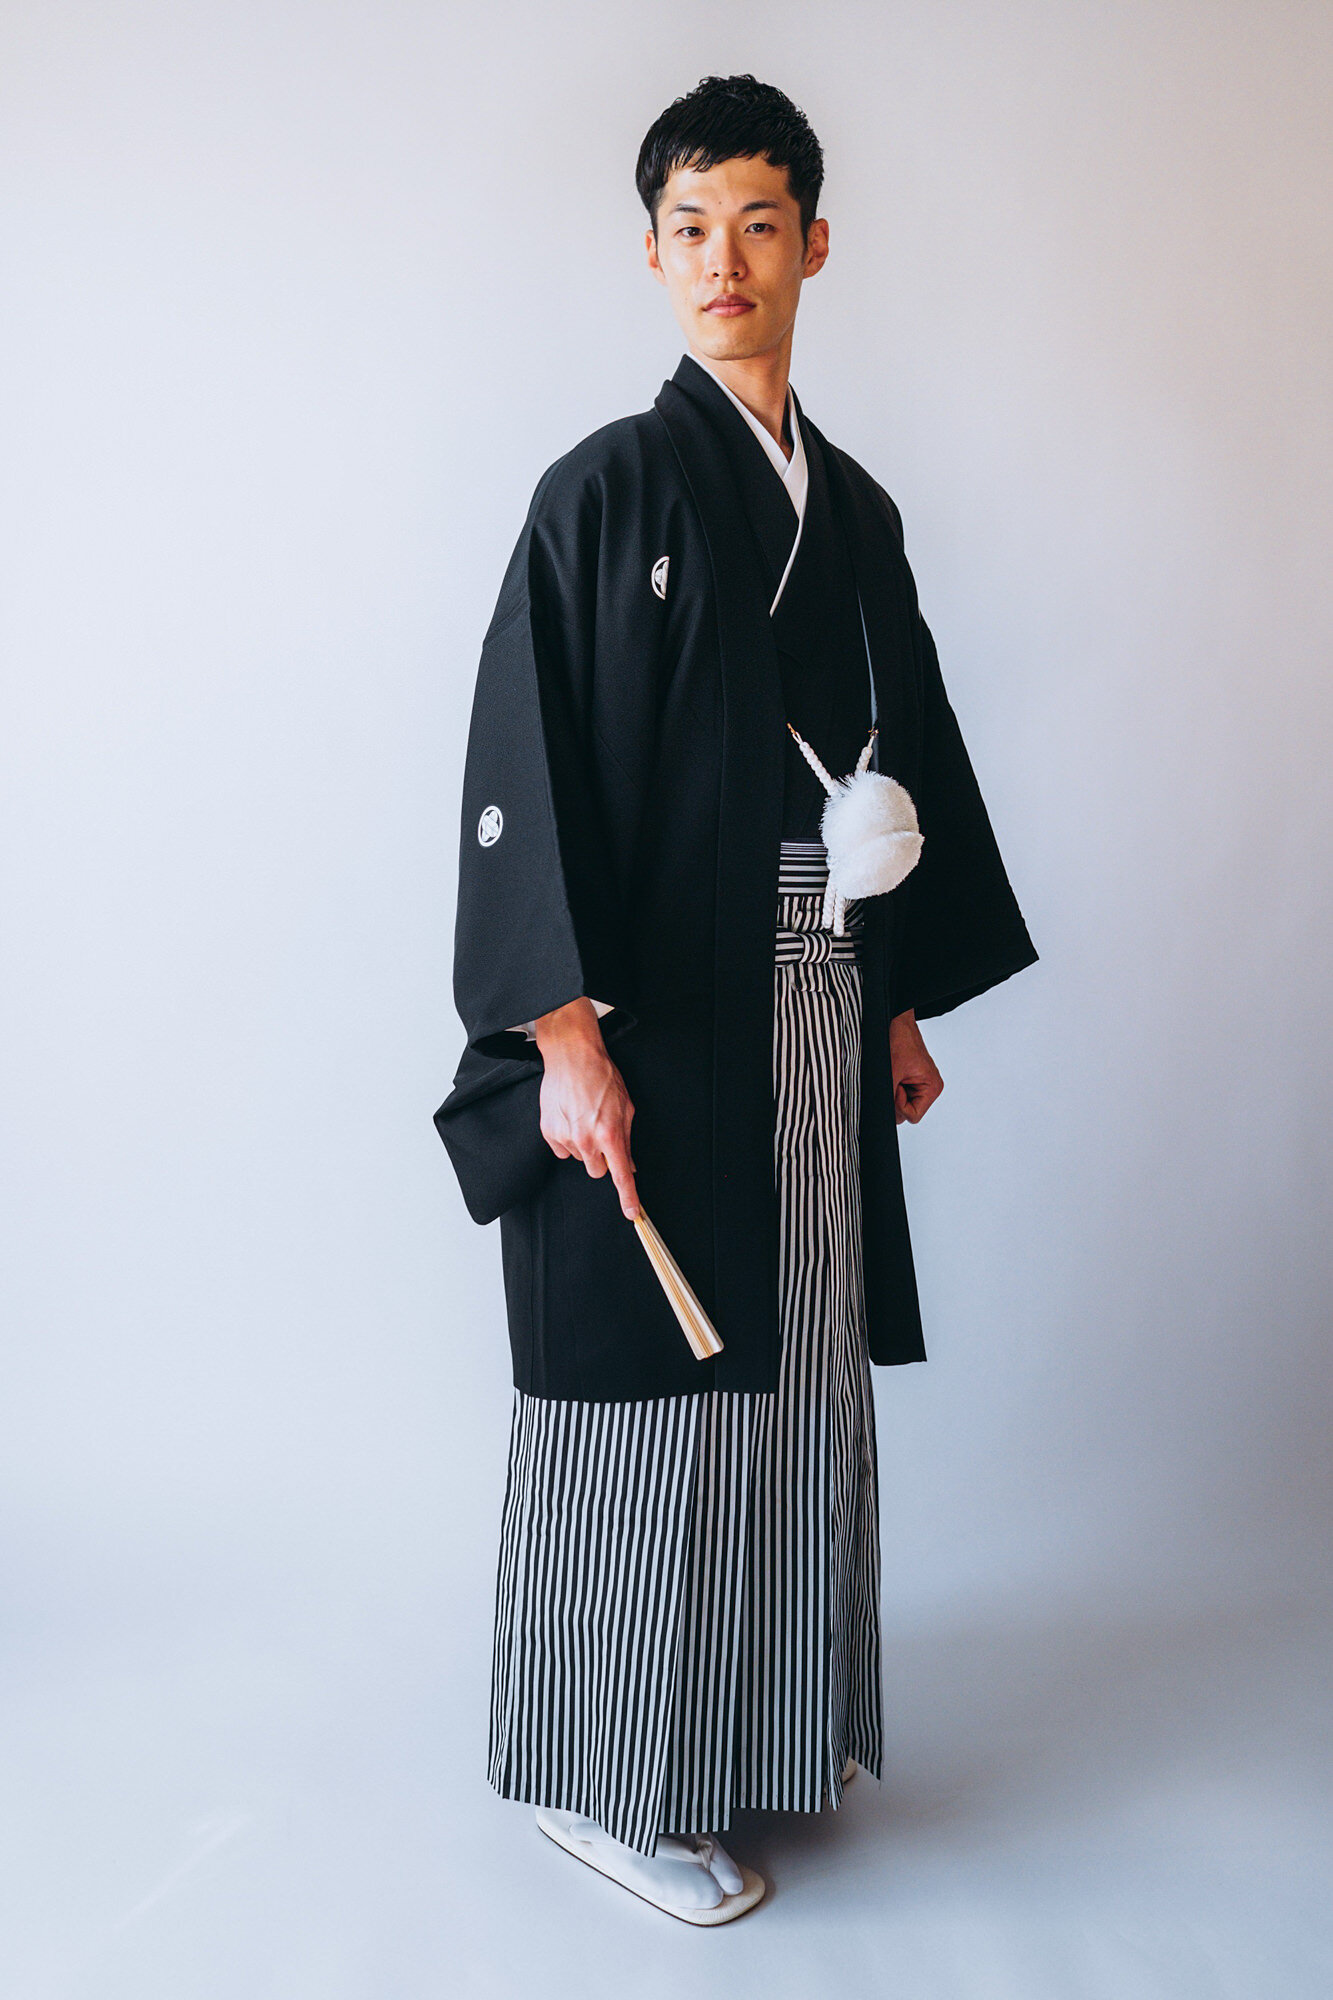 Japanese_bride_kimono-27.jpg